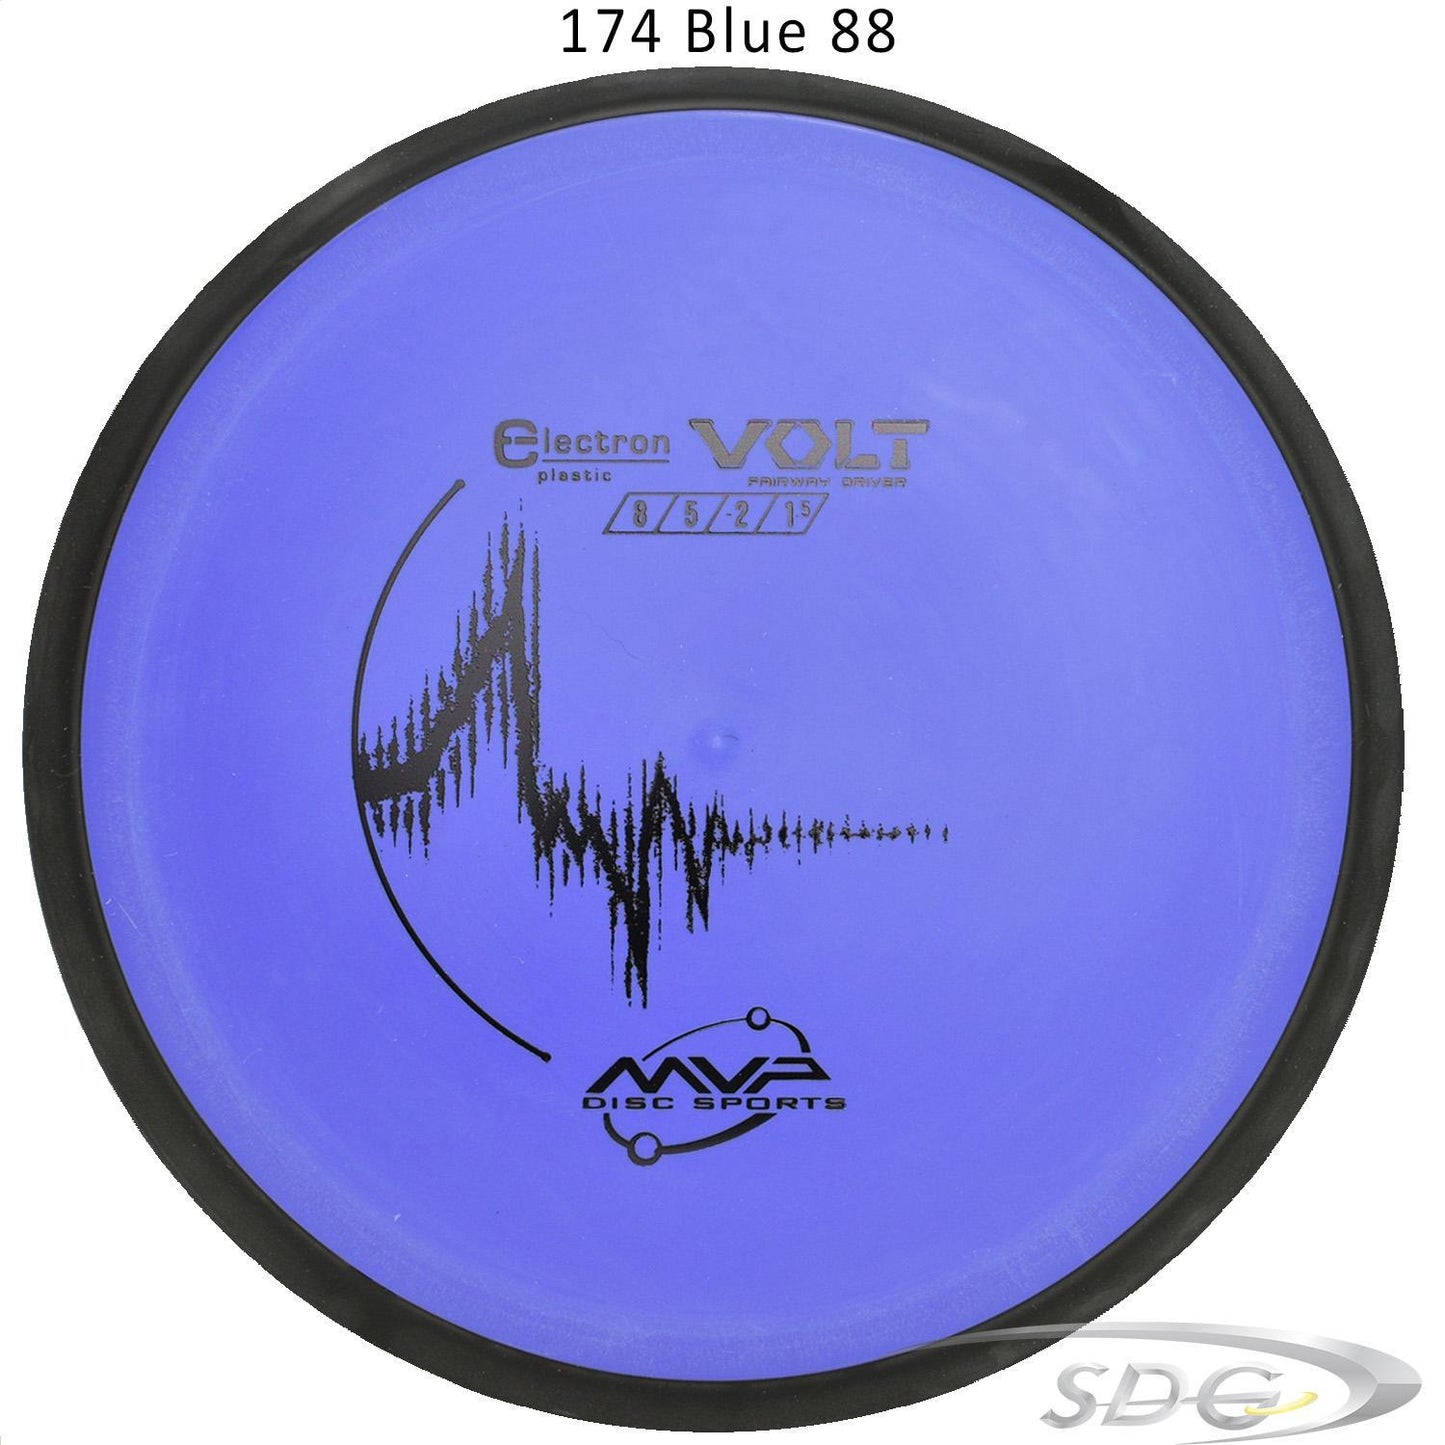 mvp-electron-volt-disc-golf-fairway-driver 174 Blue 88 